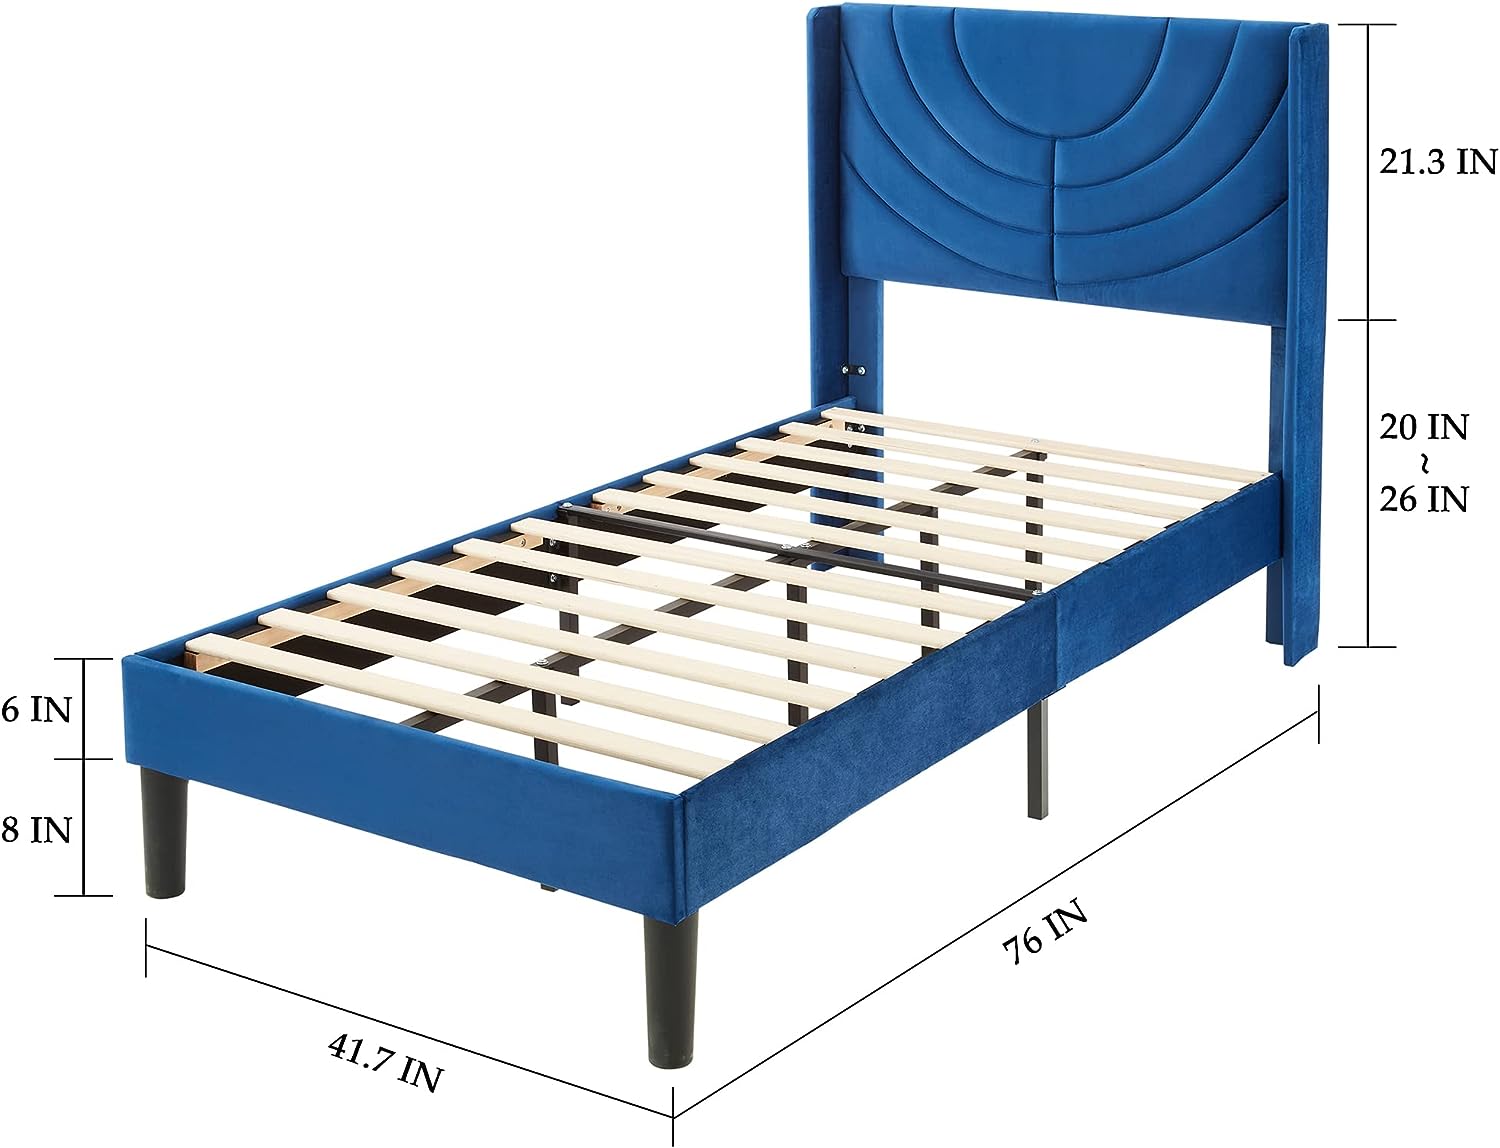 VECELO Upholstered Platform Bed Frame with Adjustable Fabric Headboard